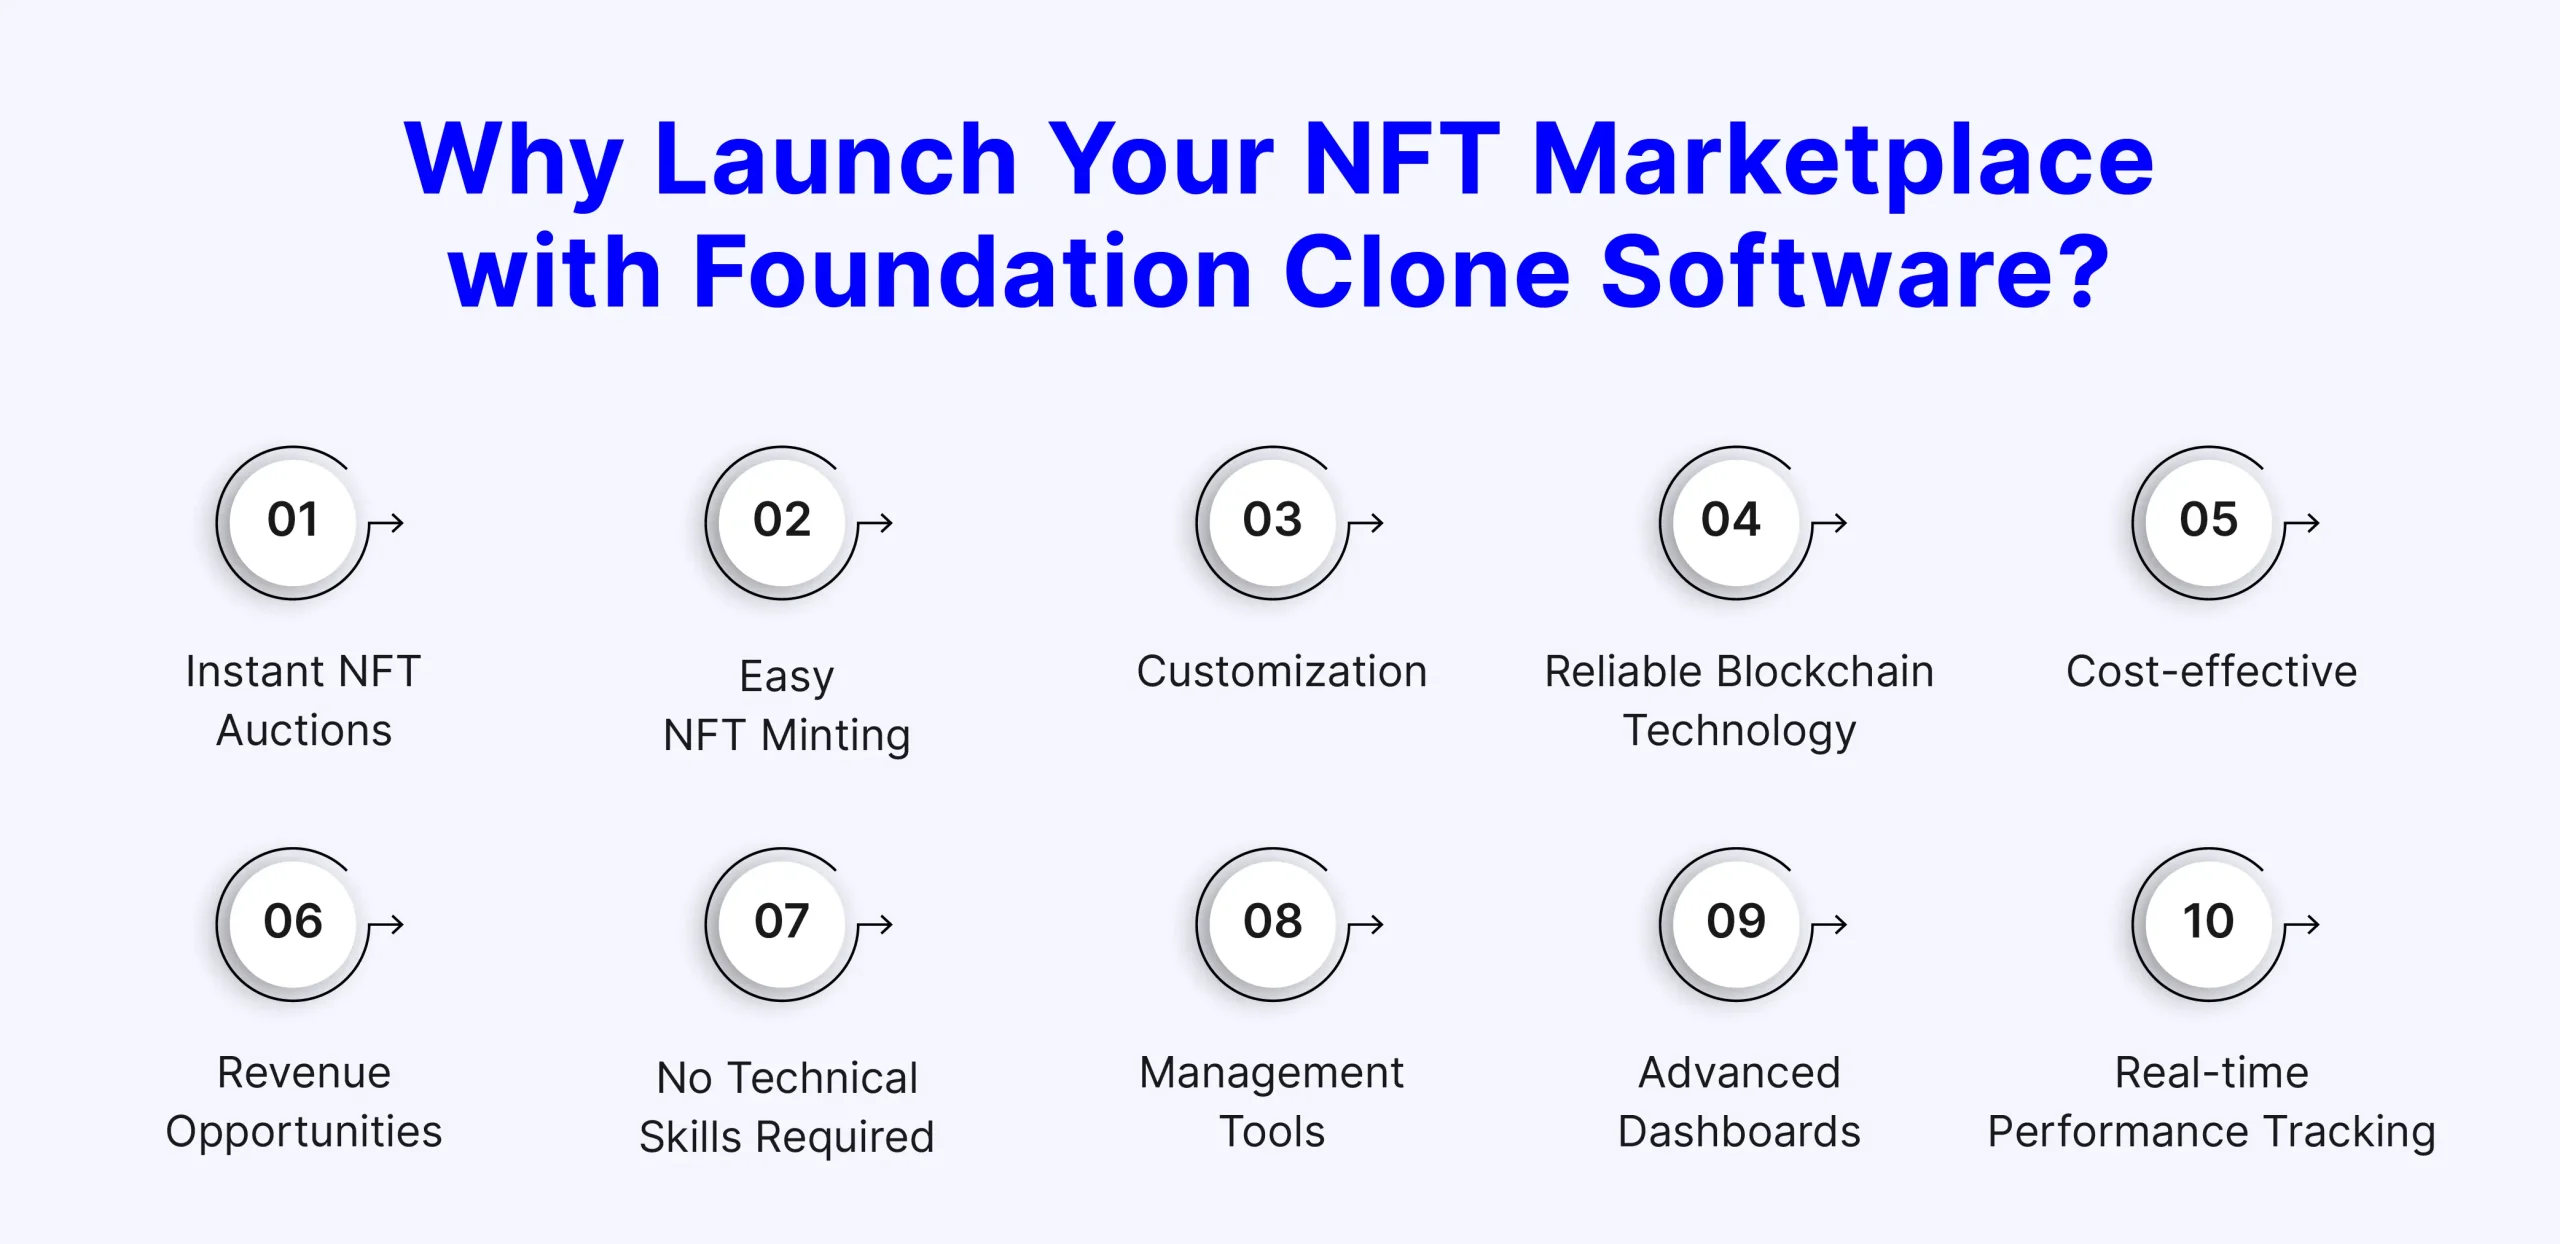 Foundation Clone Software